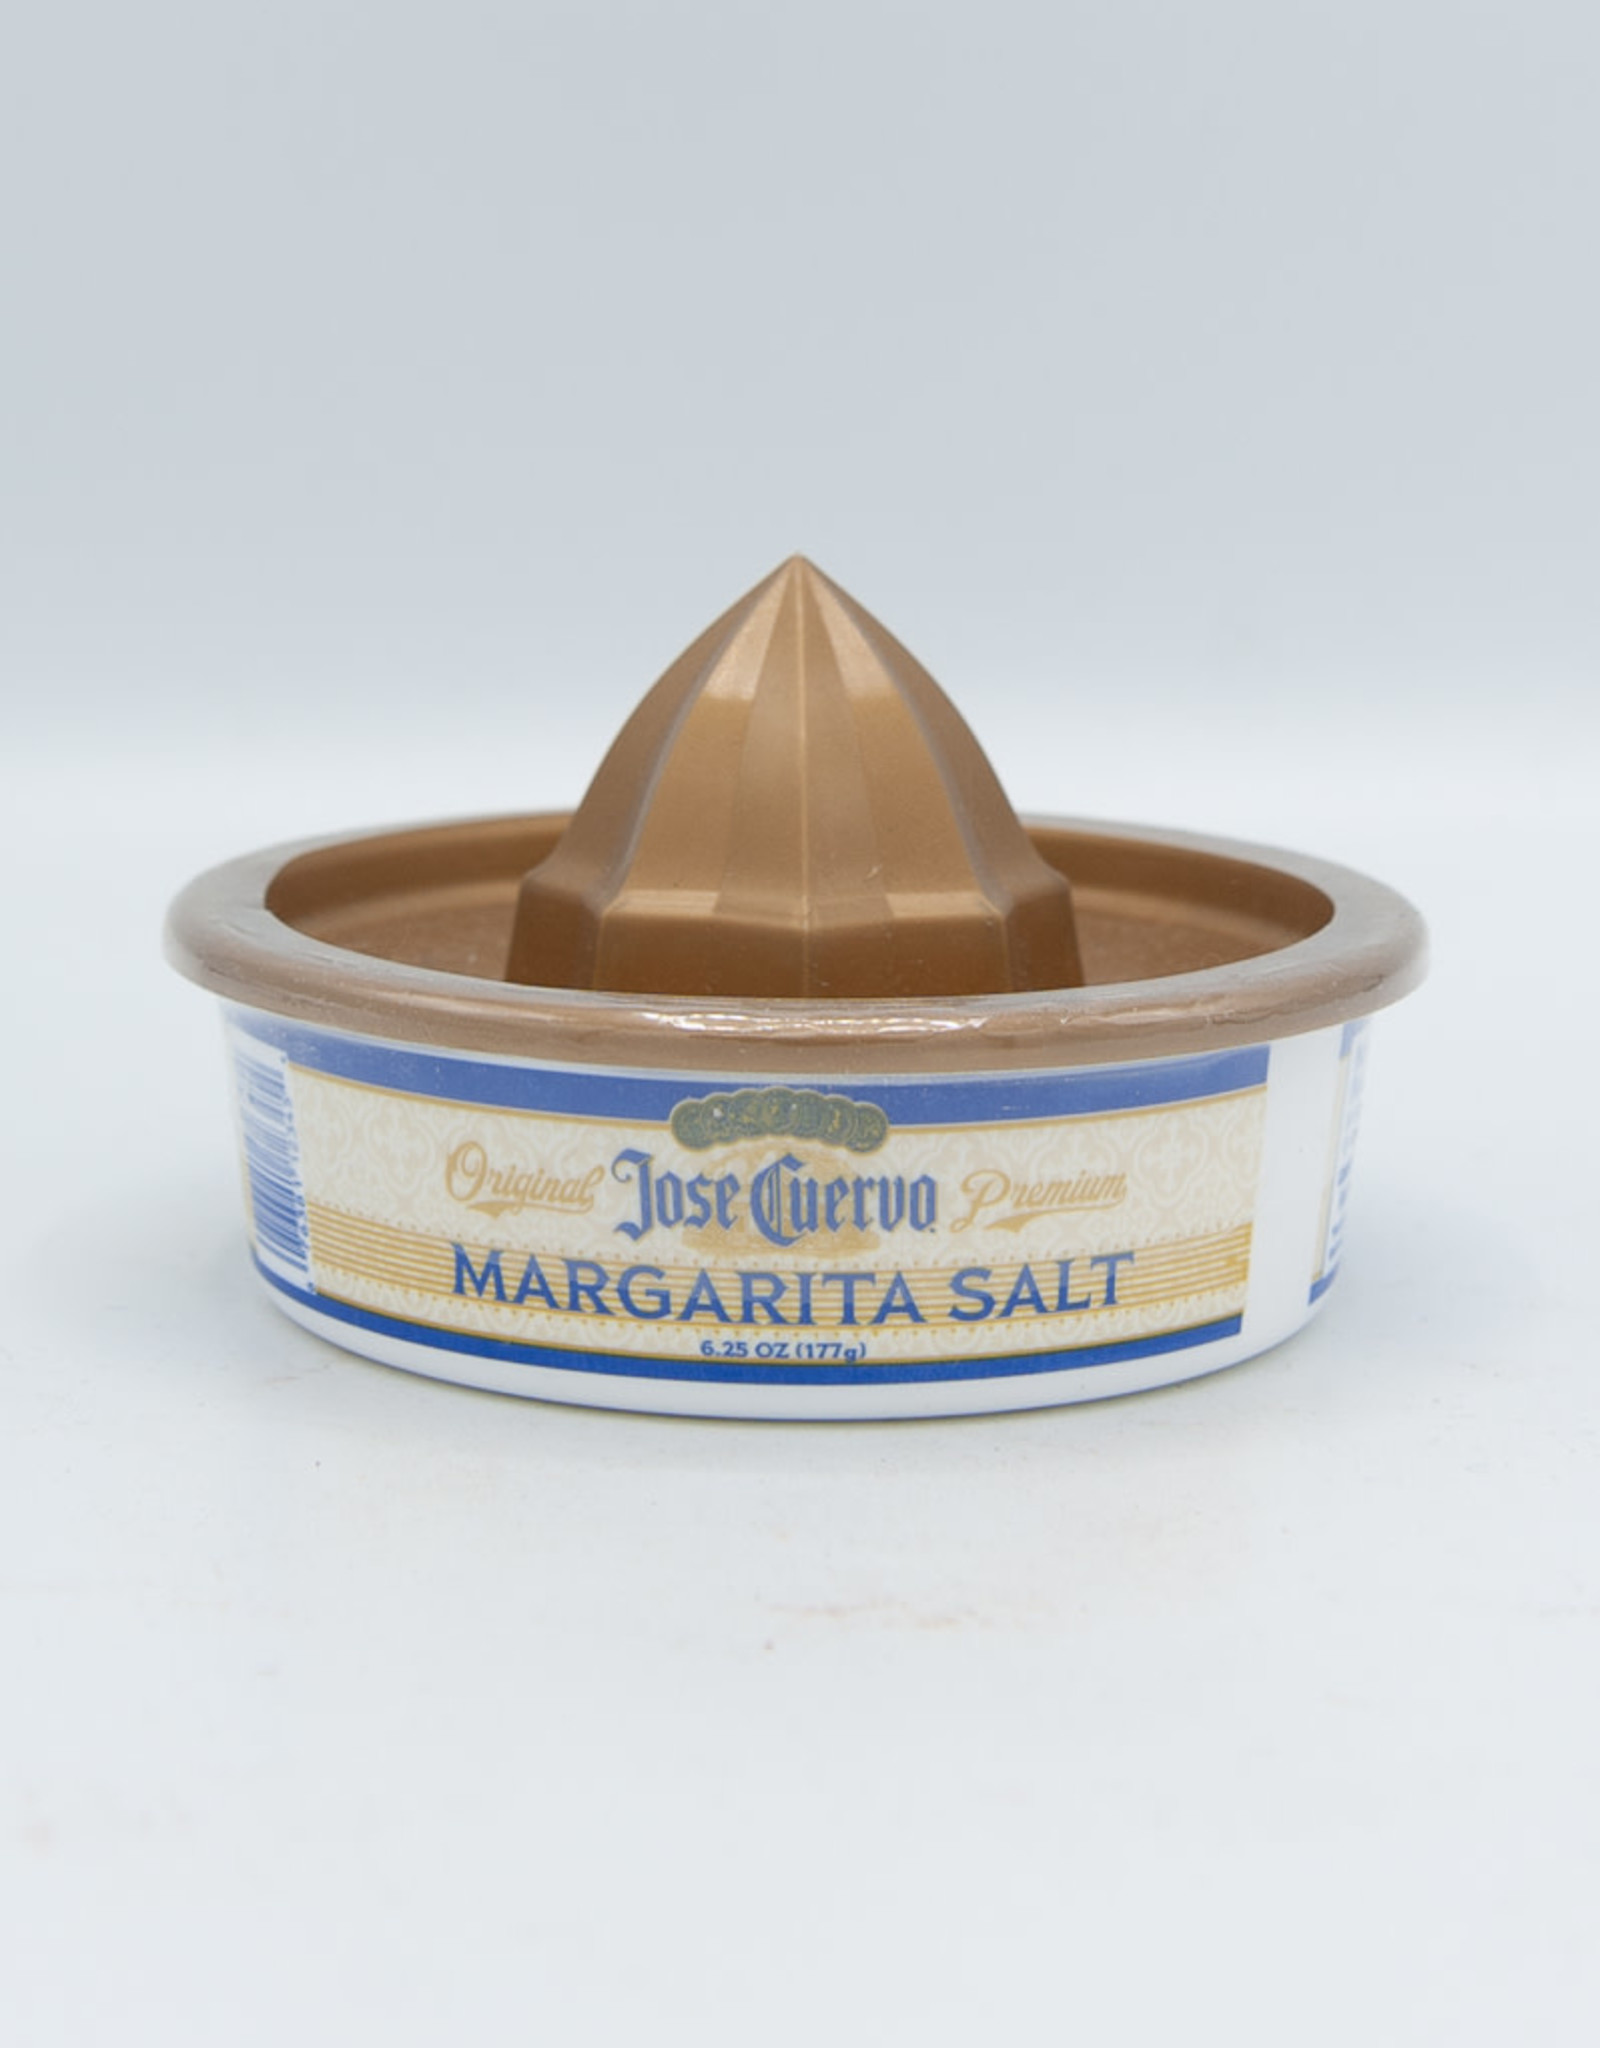 Jose Cuervo Jose Cuervo Margarita Salt